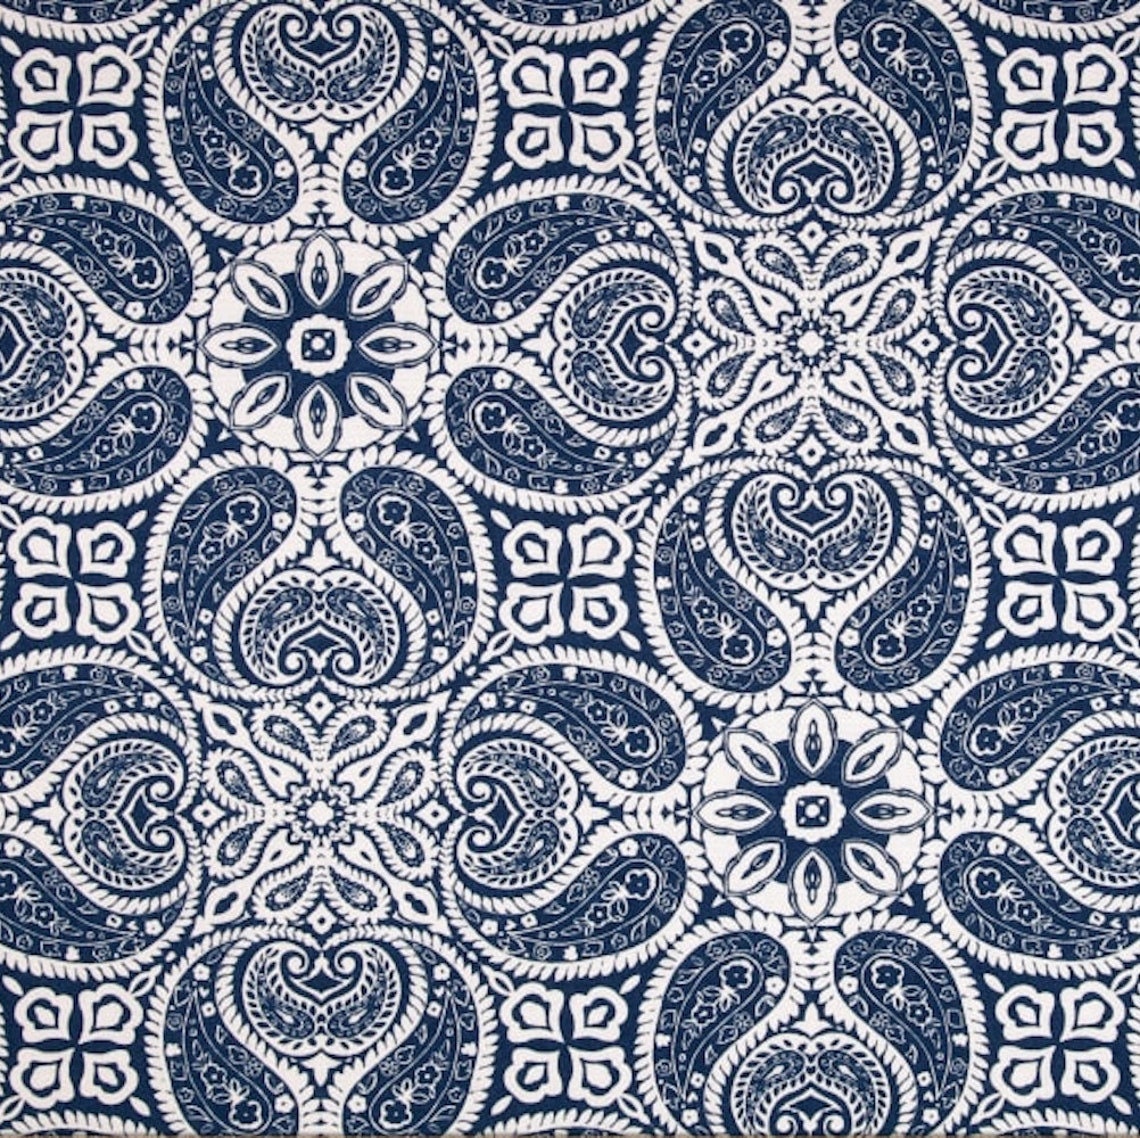 tab top curtain panels pair in tibi navy blue geometric paisley